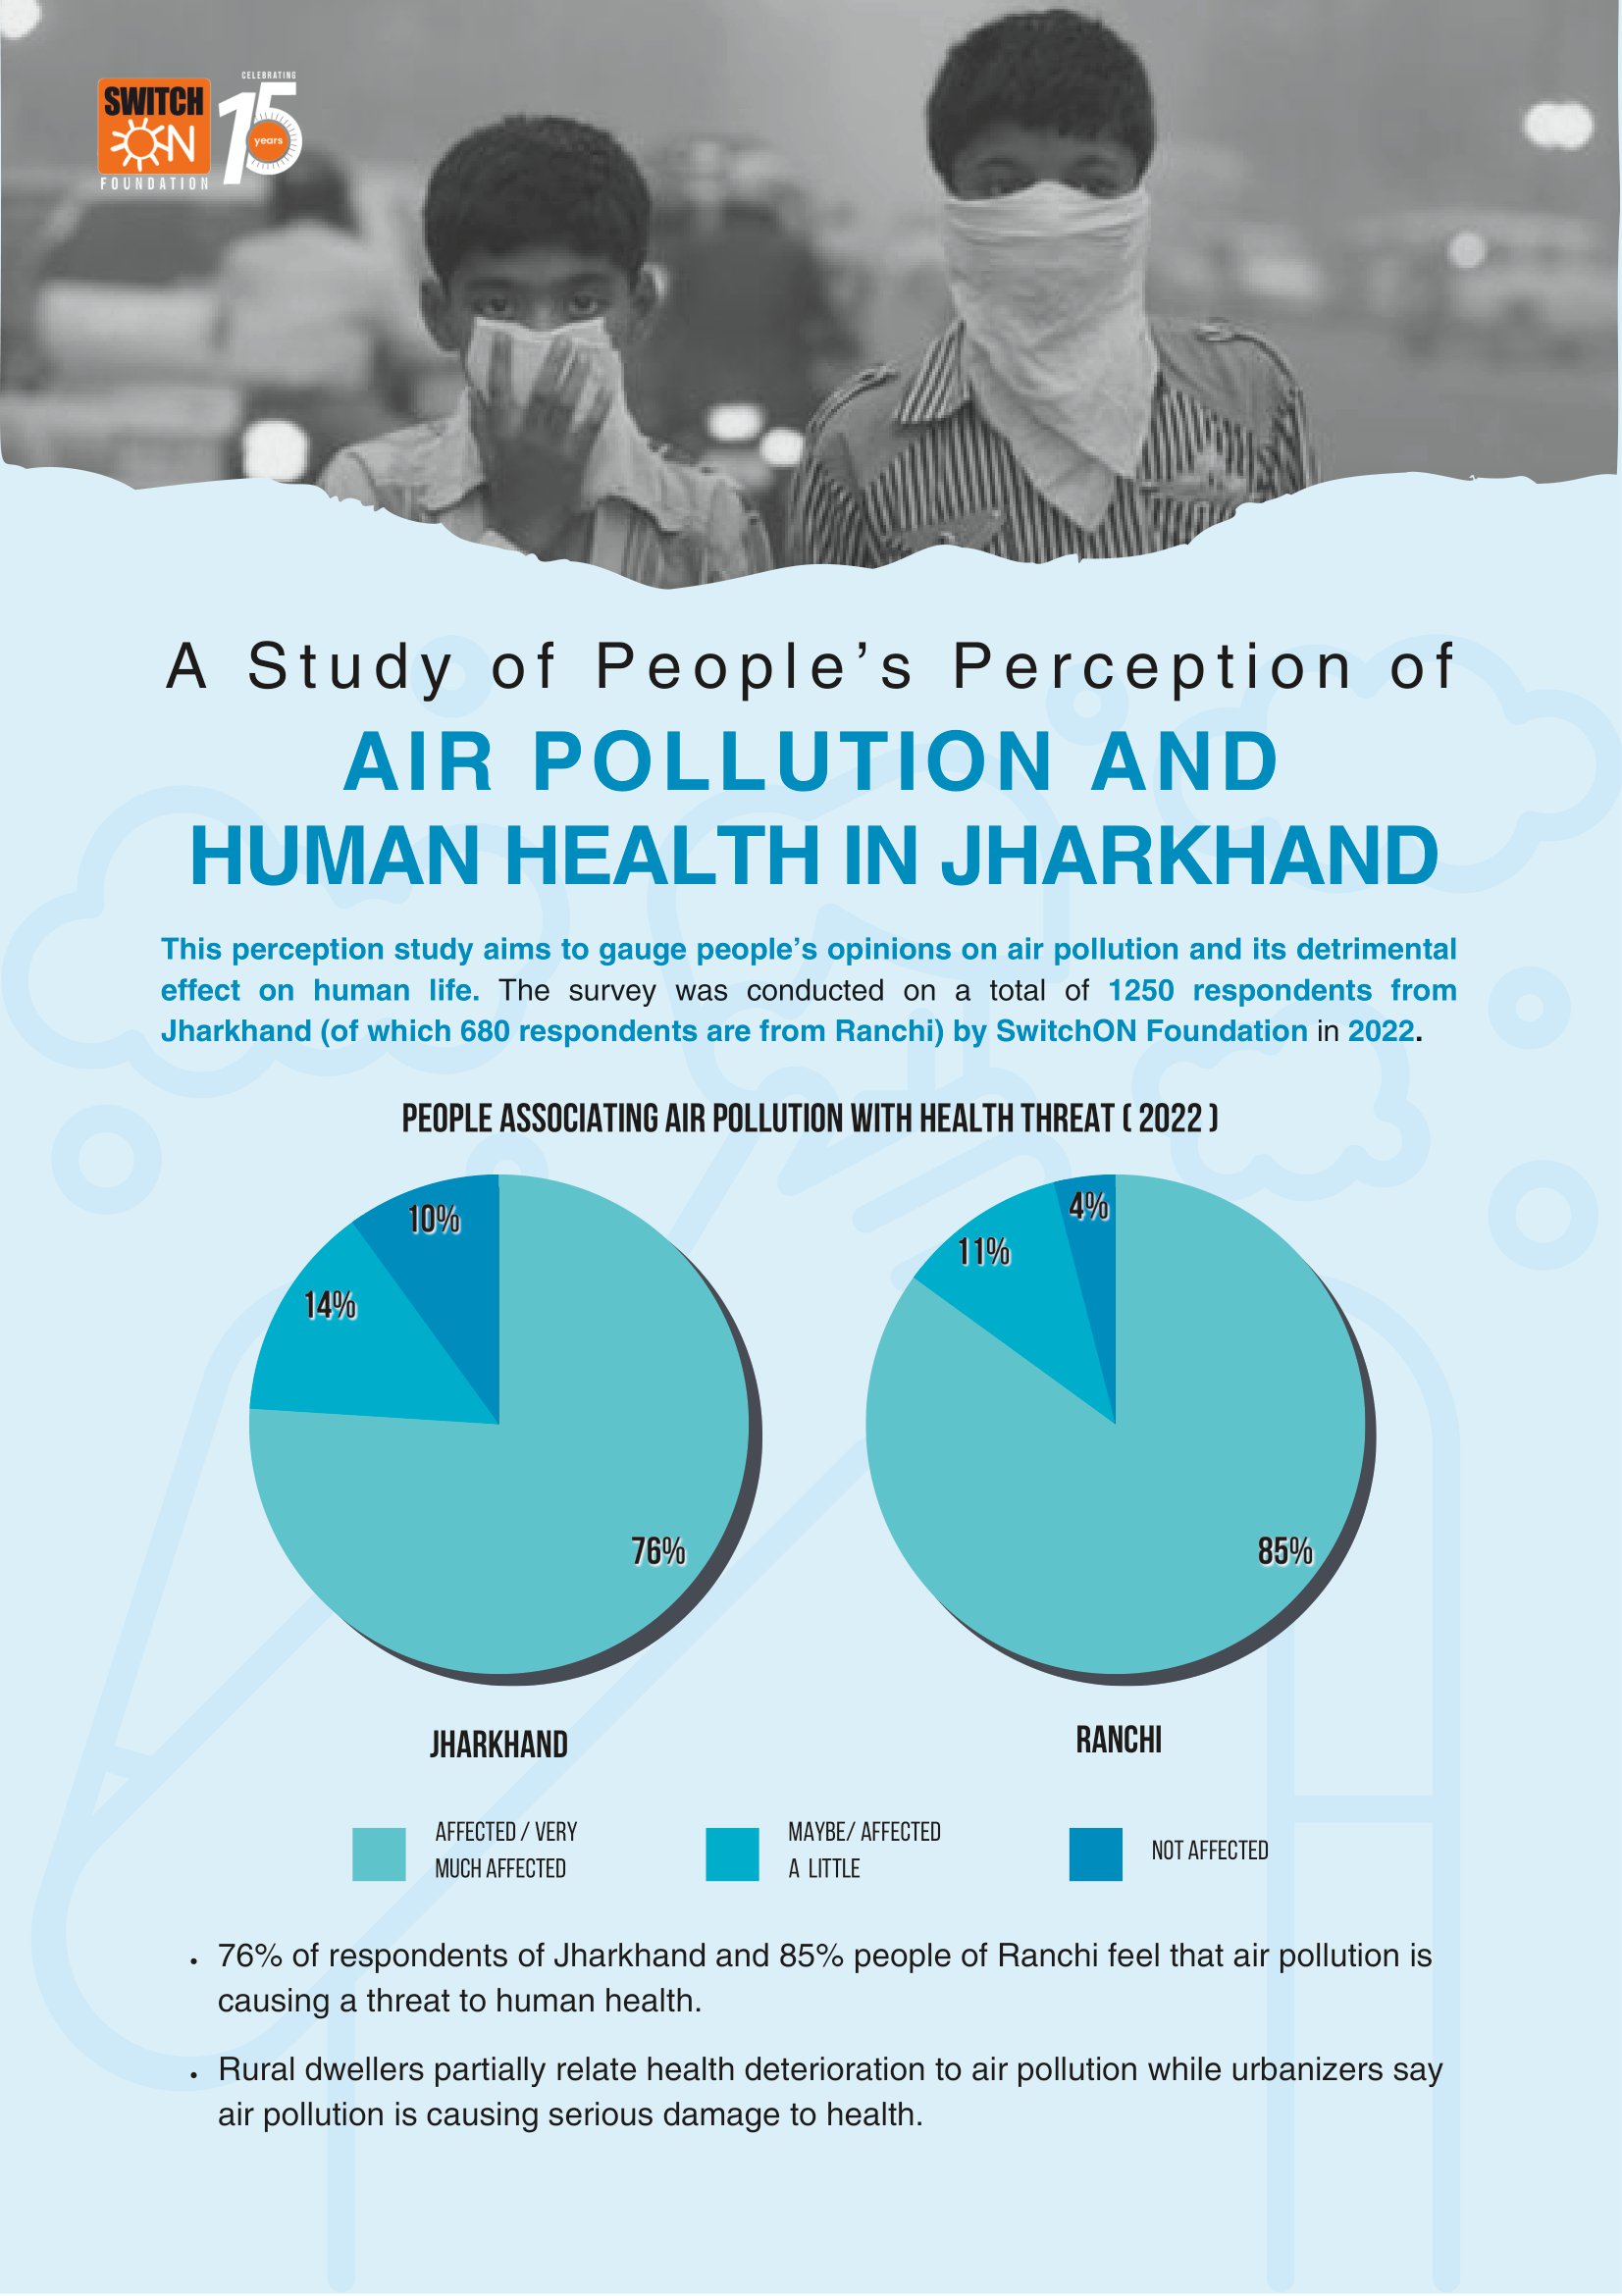 A Perception Study of Air Pollution & Human Health | Jharkhand Infobrief